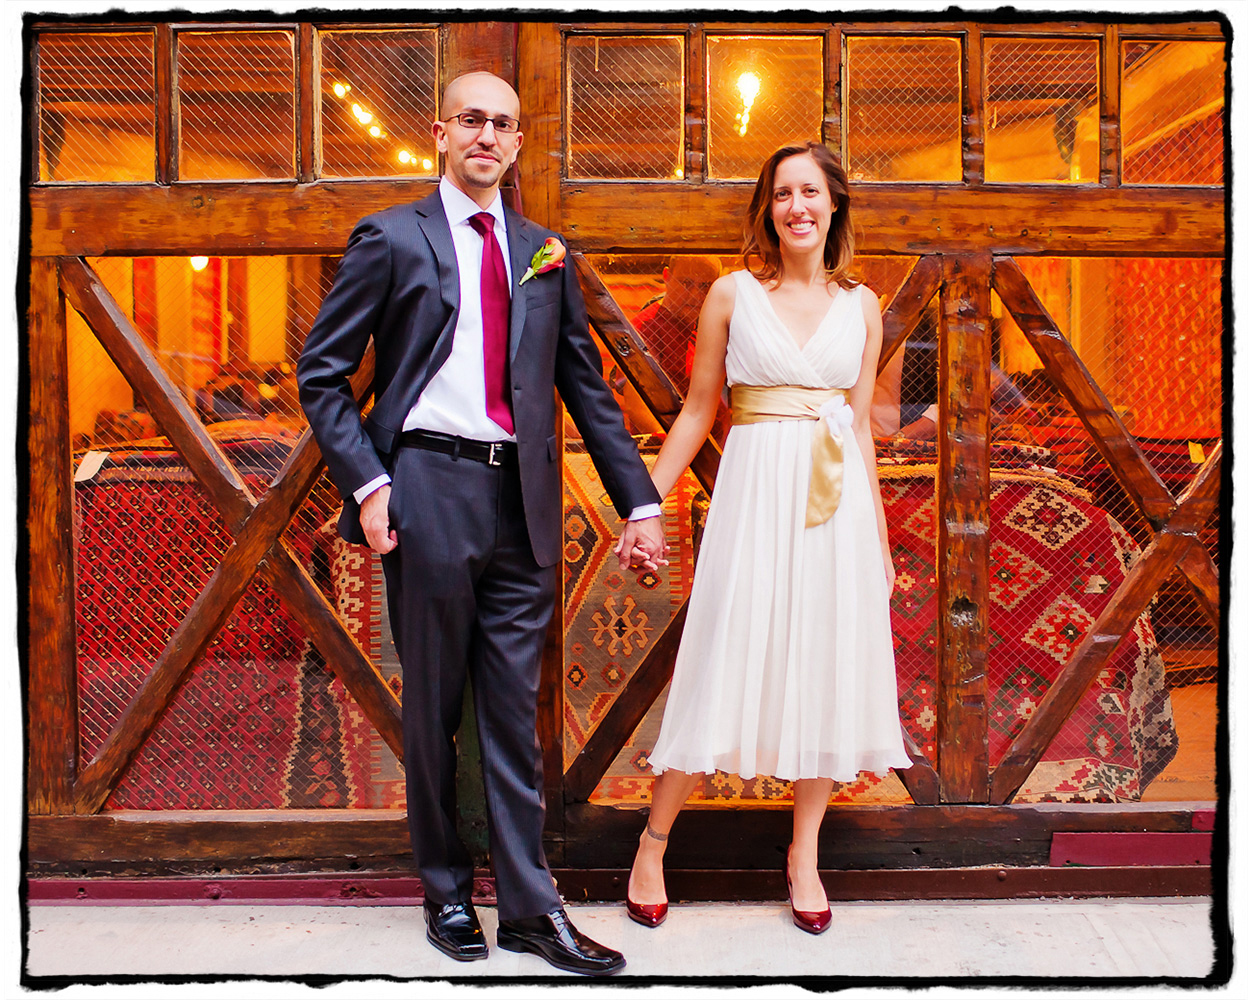 Adam and Shireen took a walk around the surrounding SoHo blocks before their wedding at Housing Works Bookstore in Manhattan.